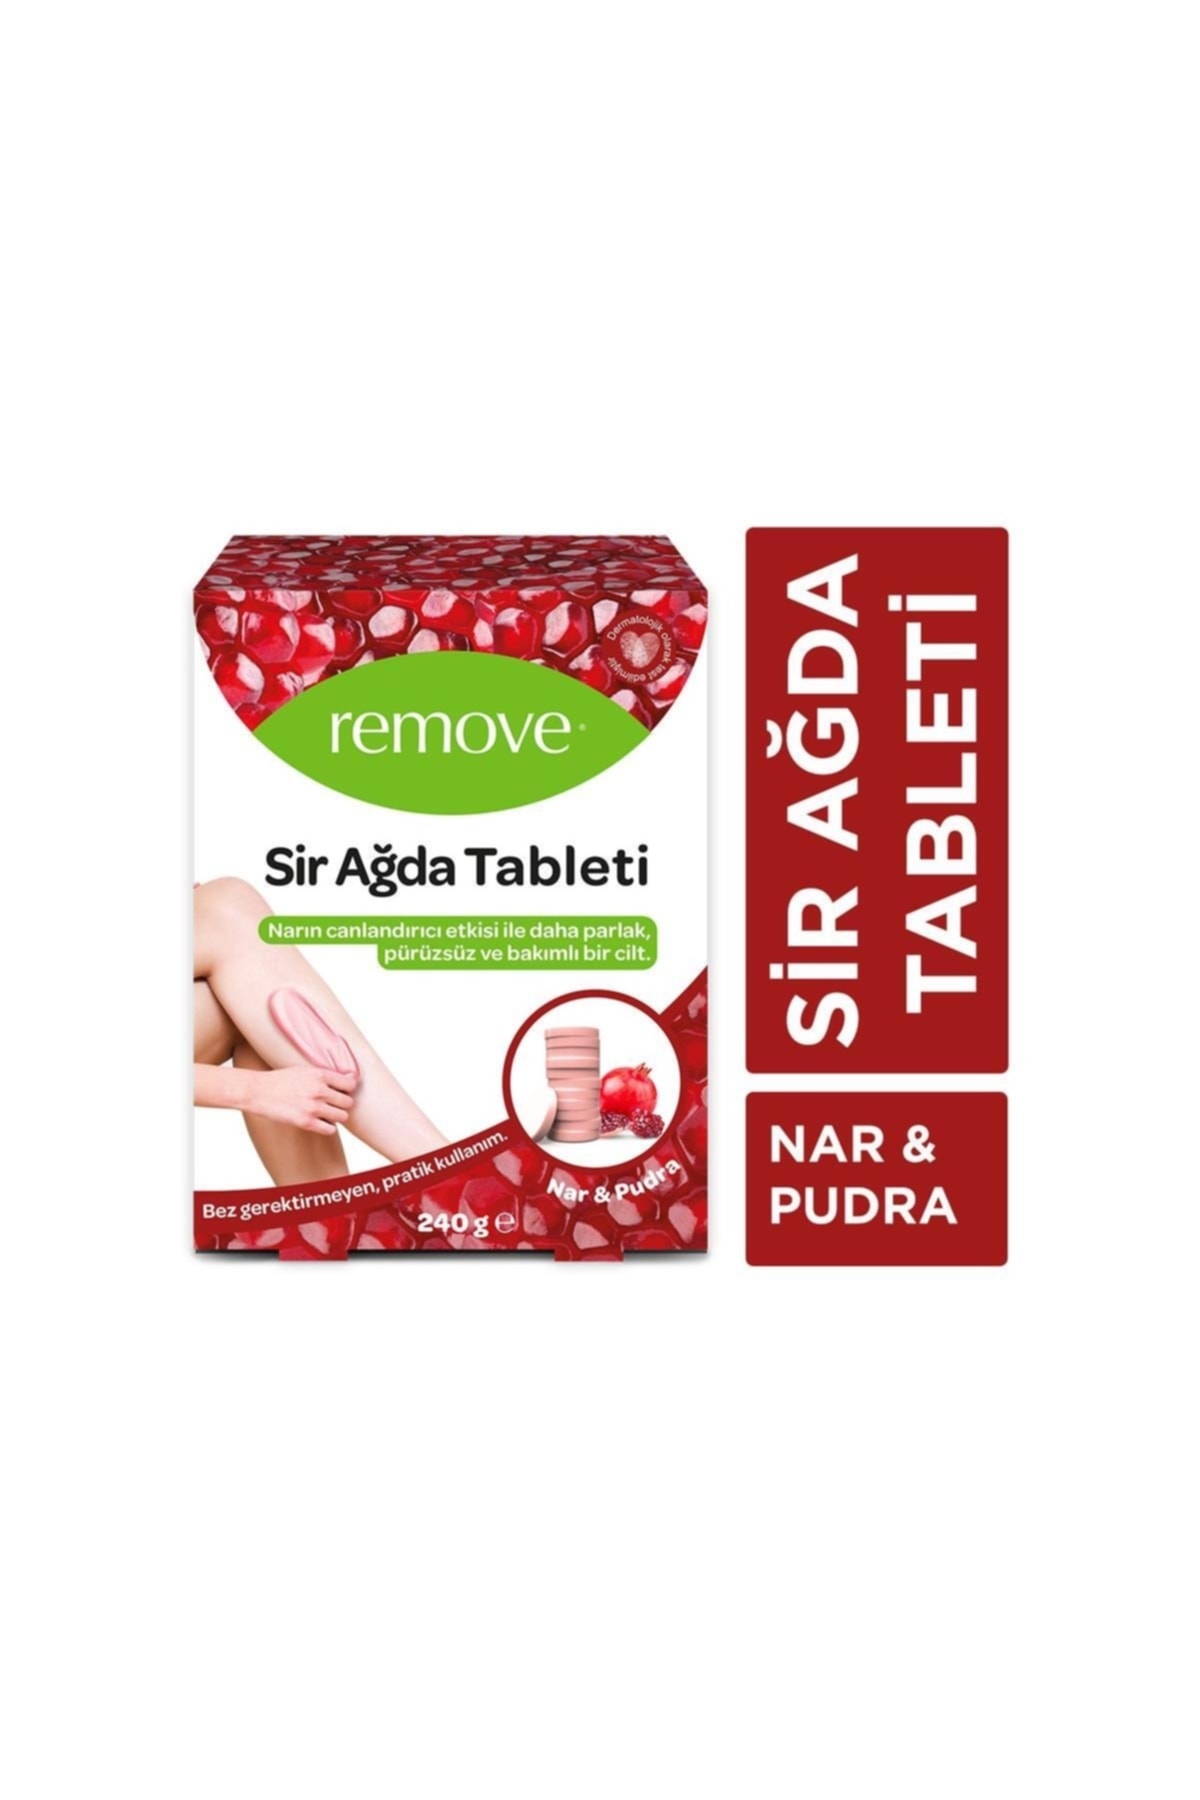 remove Sir Ağda Tableti Nar Pudra 240 gr